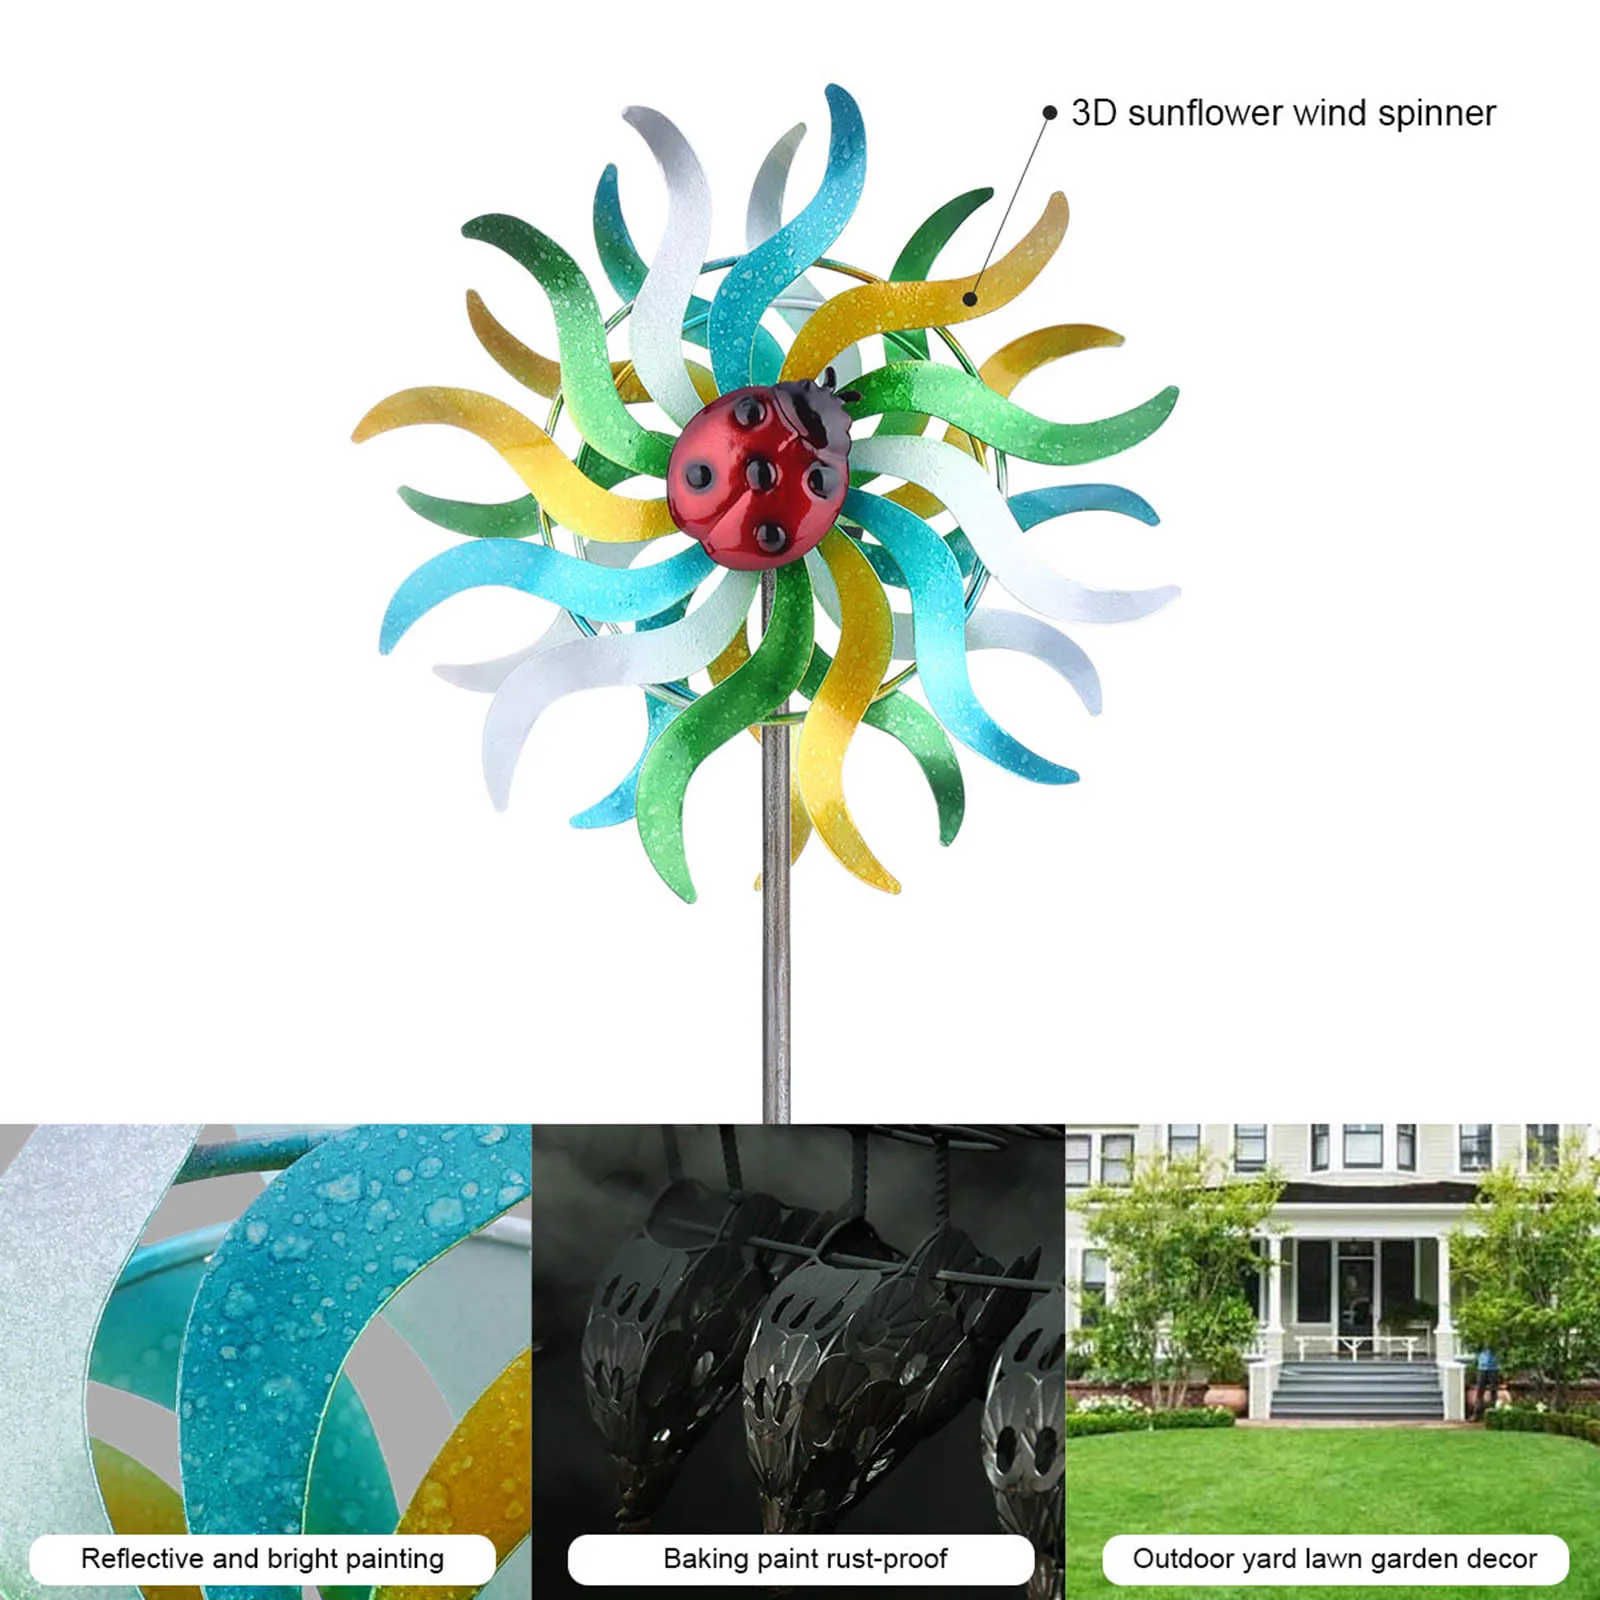 Tooarts 3D Sunflower Wind Spinner Bird Repeller Pinwheels Reflective Sparkly Bird Deterrent Windmill Protect Plants Garden Decor